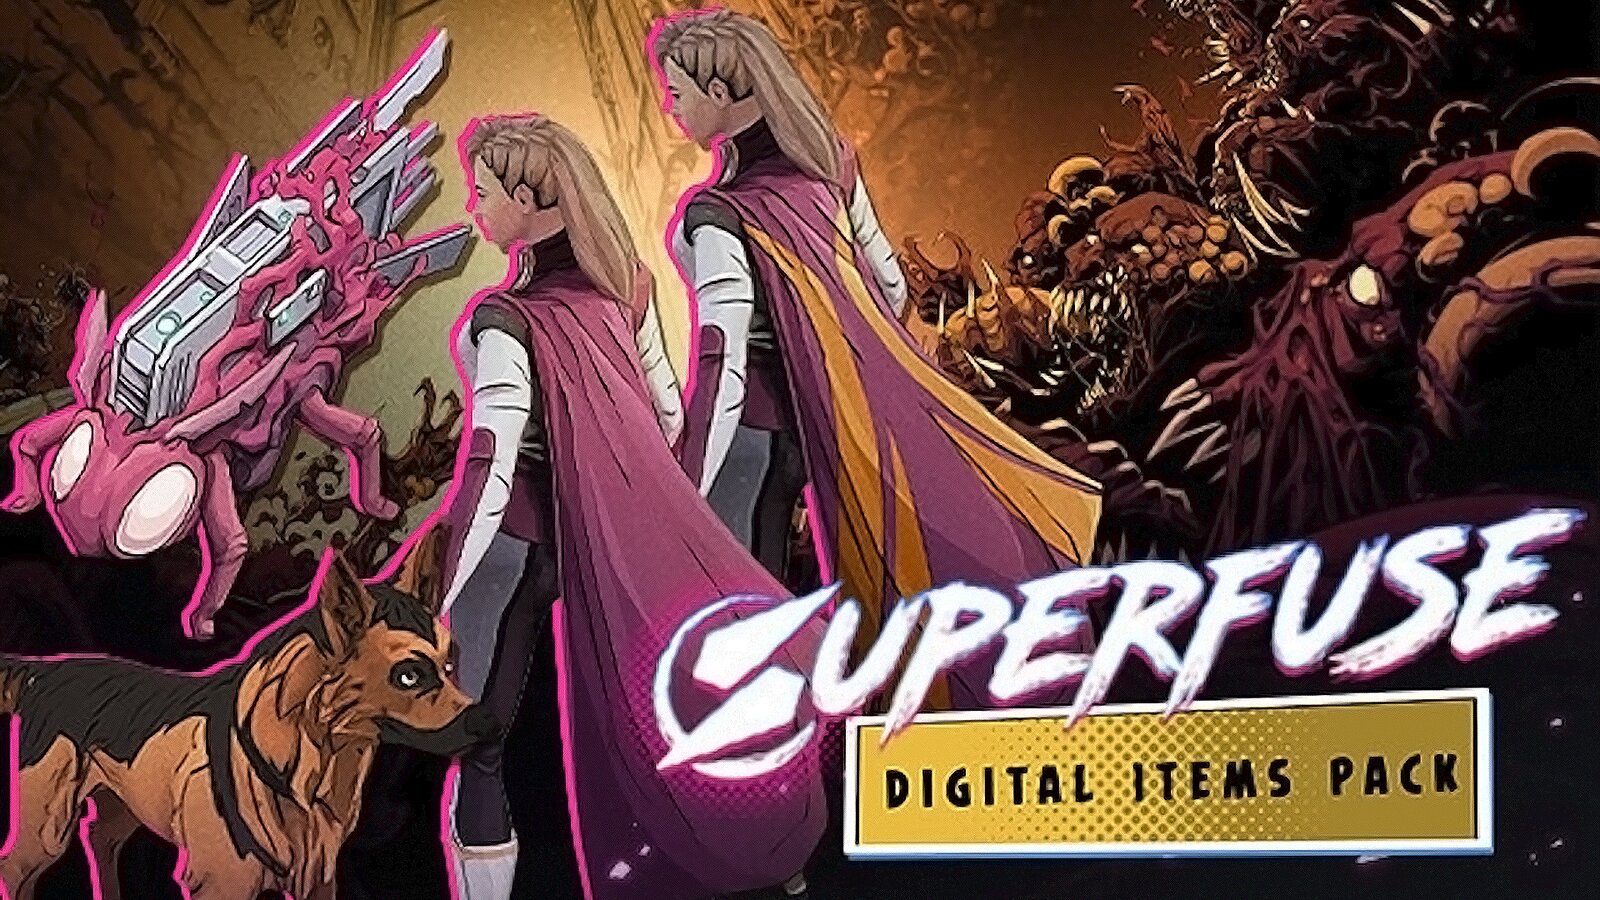 Superfuse - Digital Items Pack